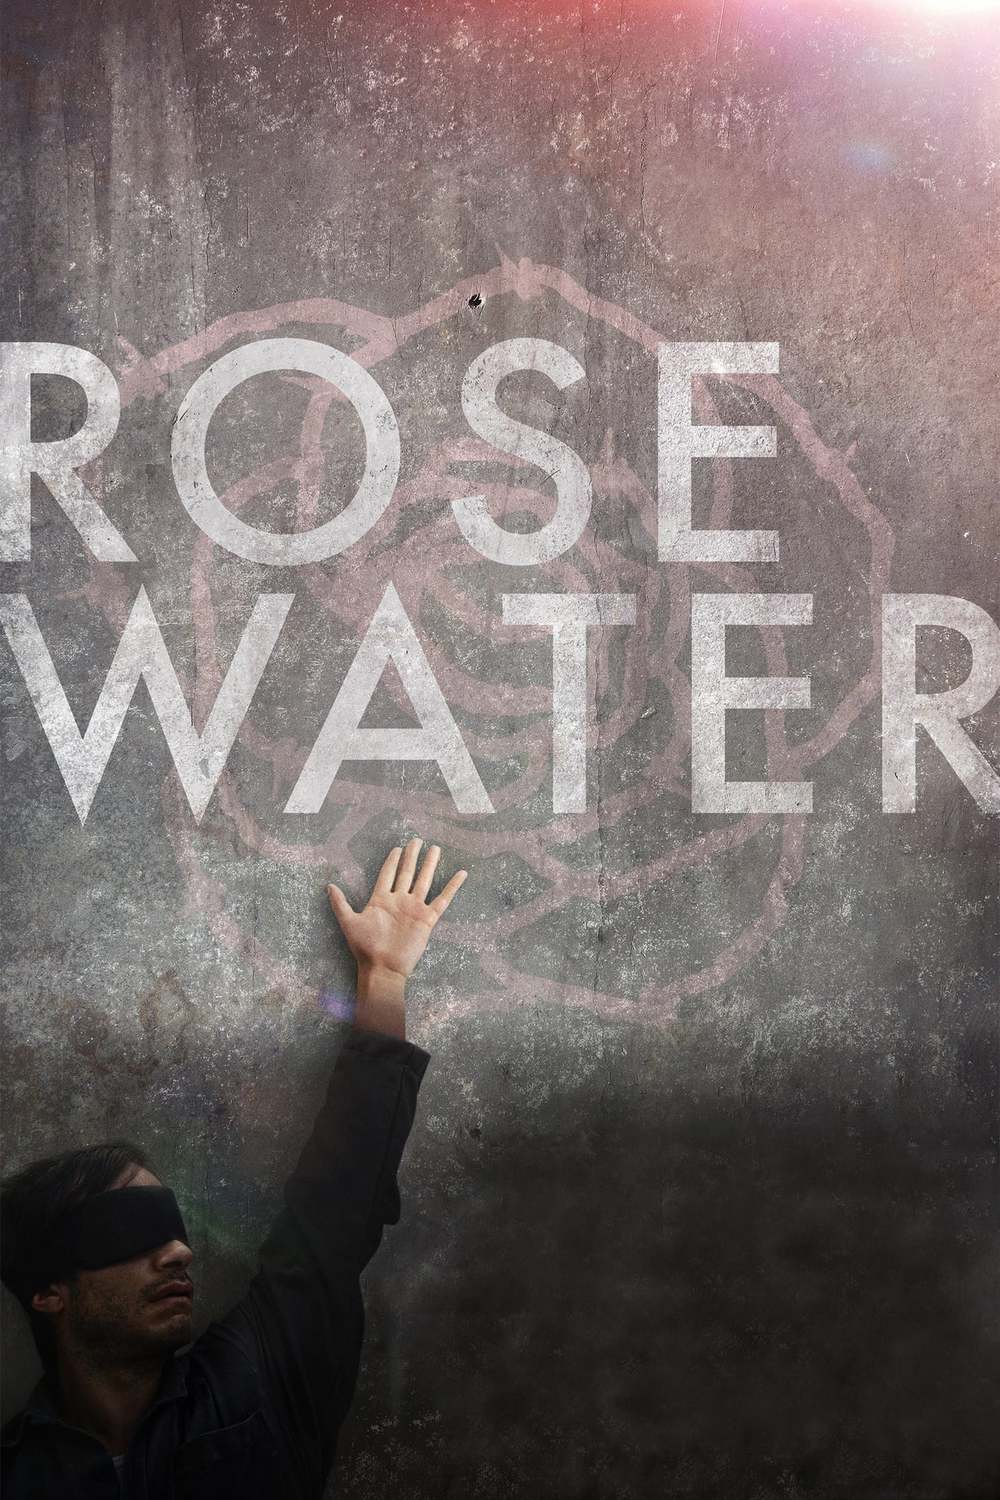 Rosewater | Fandíme filmu